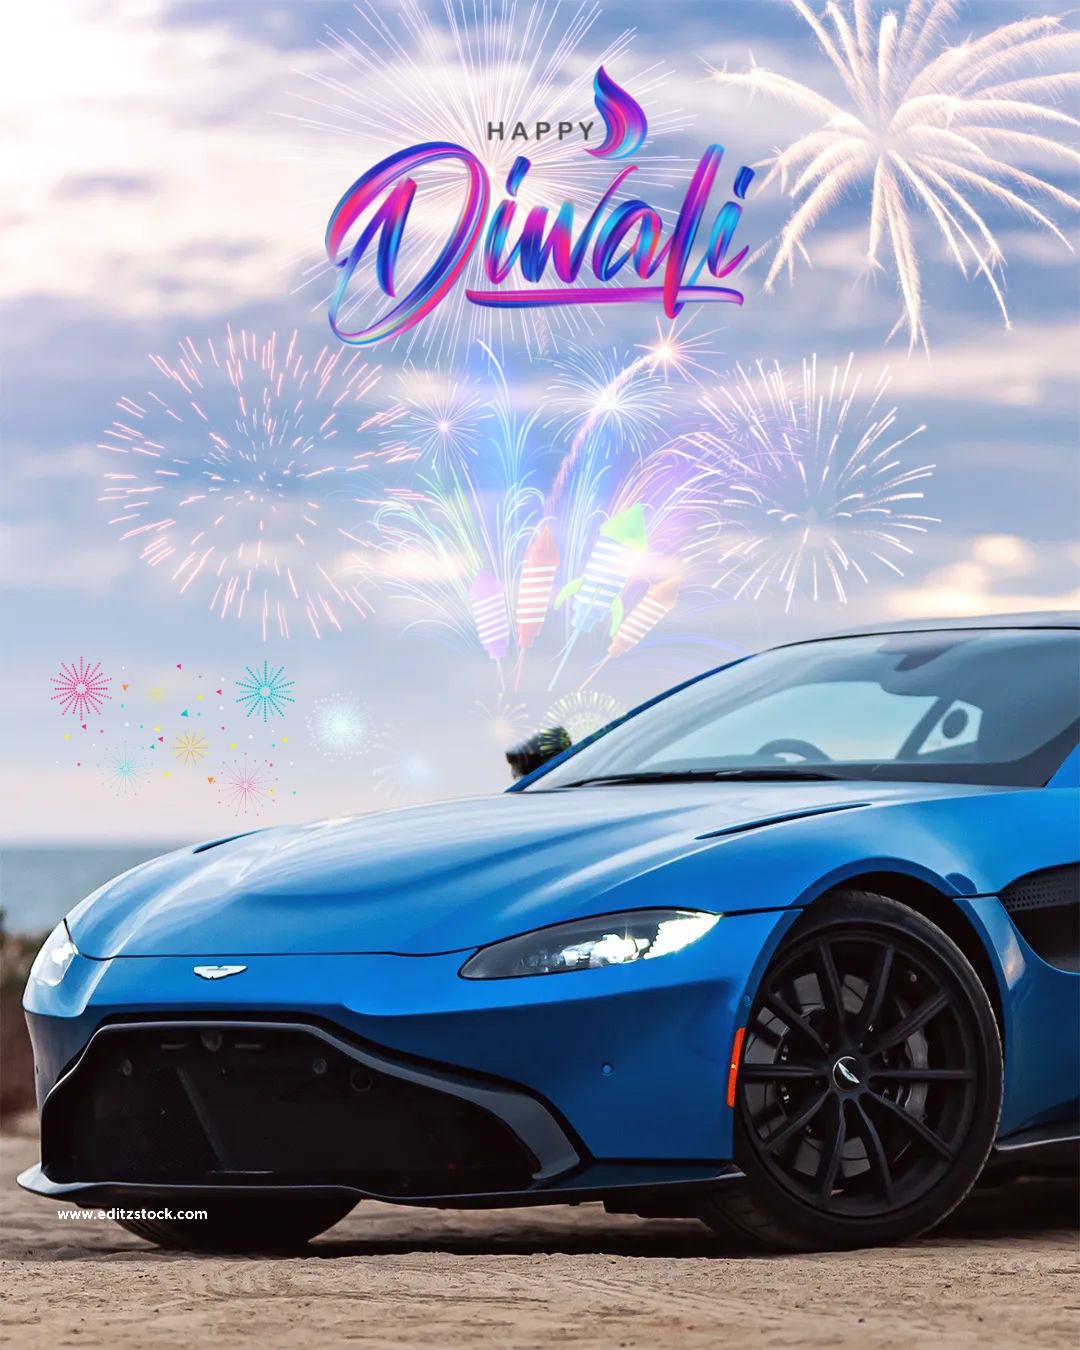 Diwali Background with Car Cb Editibg Download